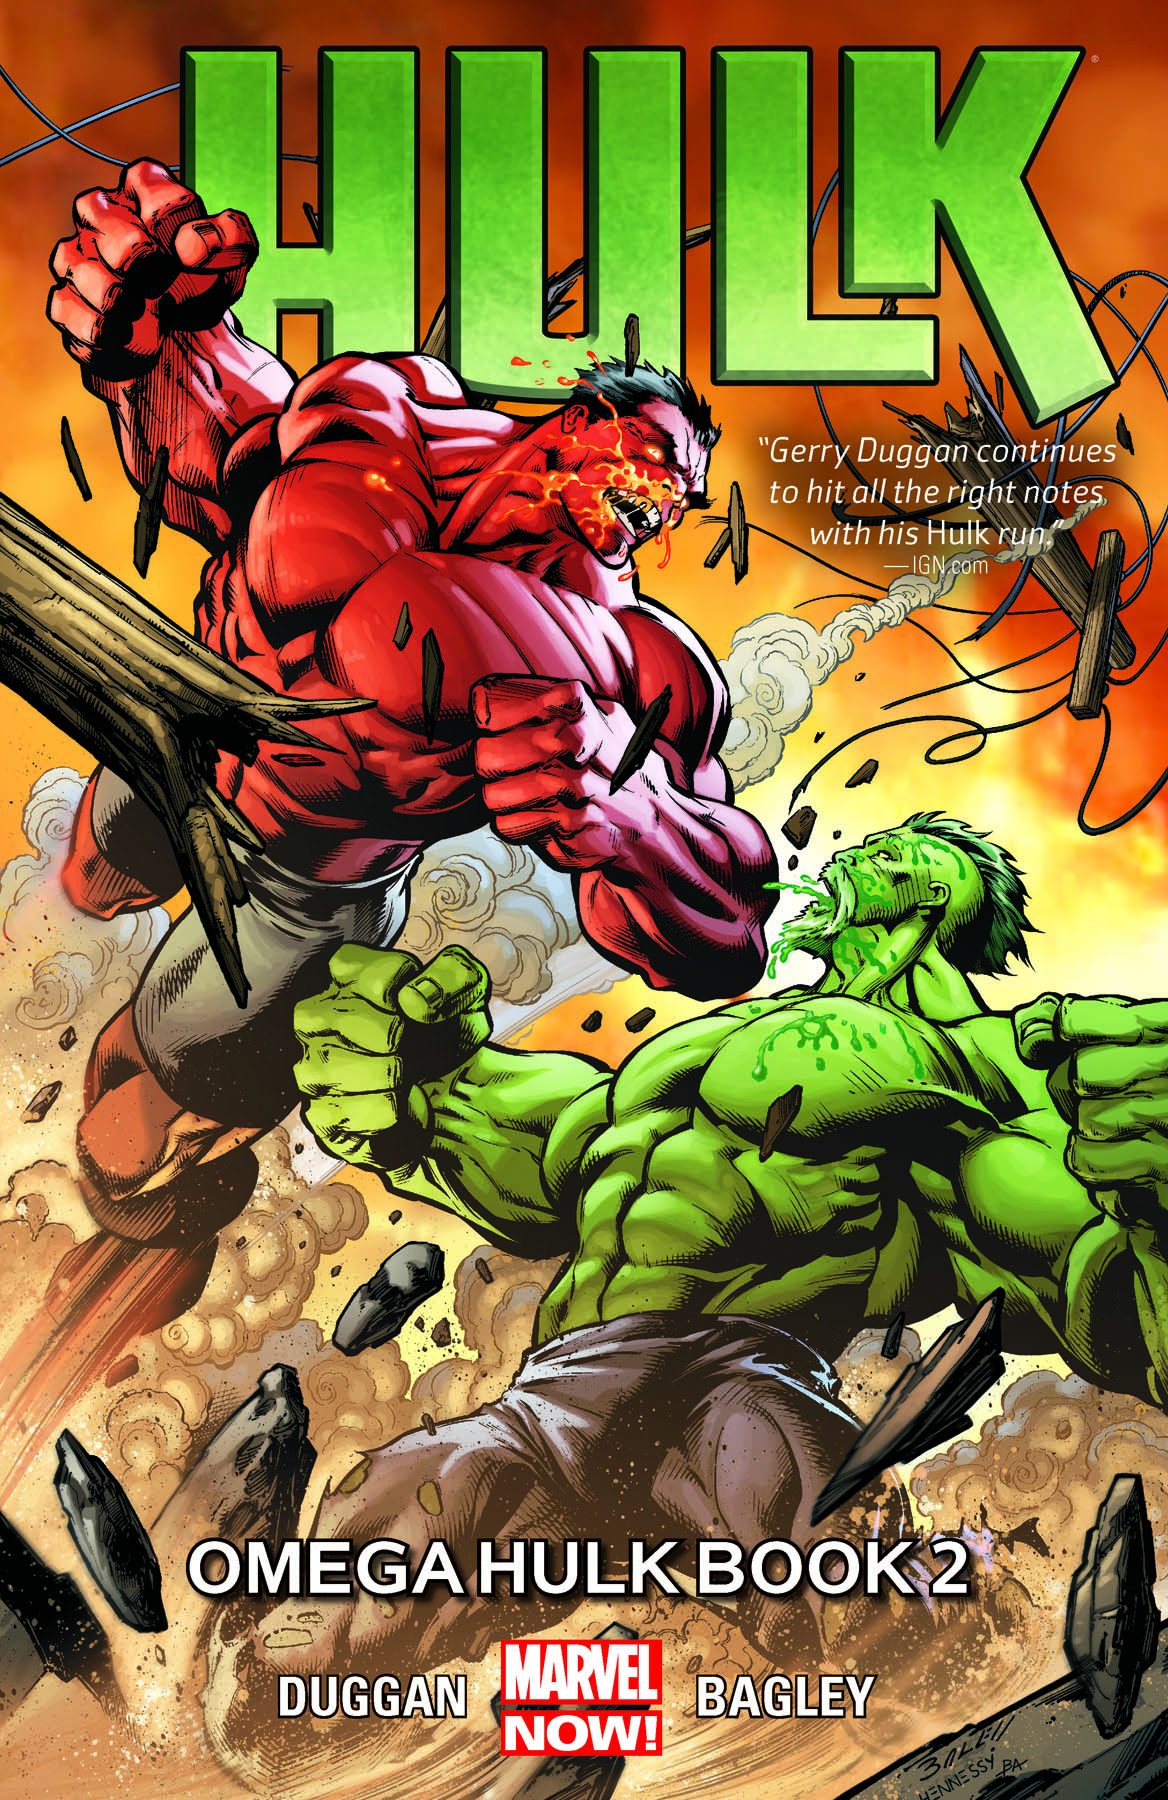 Hulk Vol. 3: Omega Hulk Book 2 (Trade Paperback)